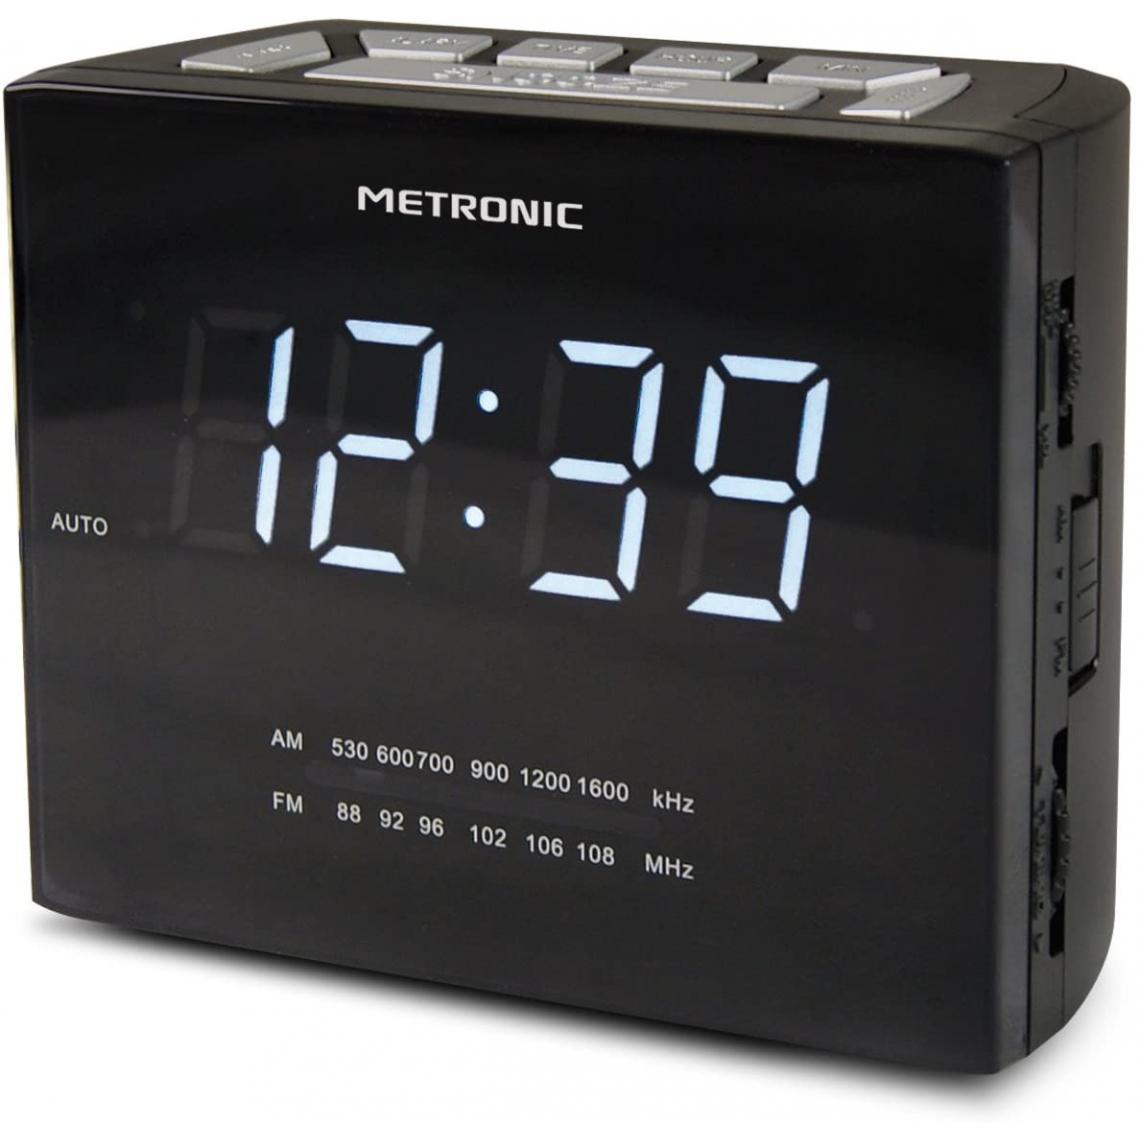 Metronic - radio Réveil avec grand Affichage LED noir - Radio